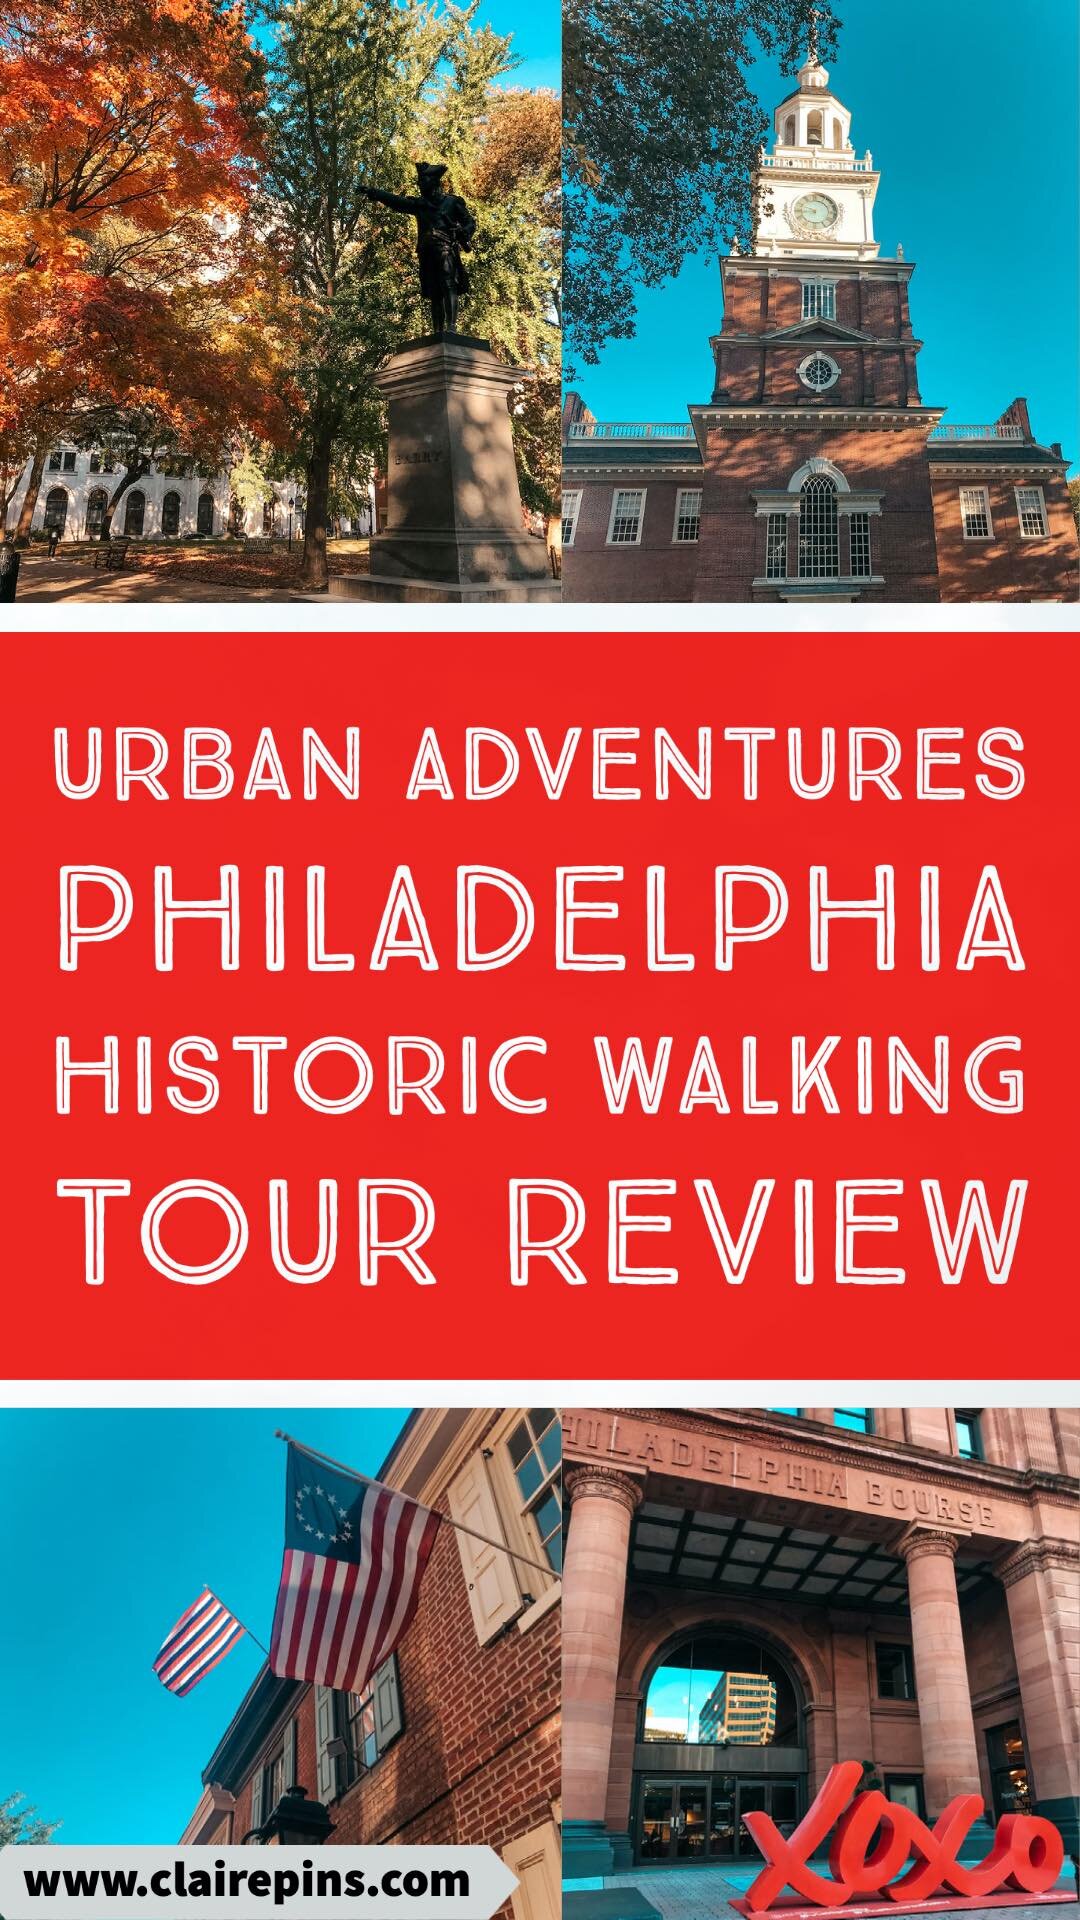 Urban Adventures Philadelphia Review.jpg